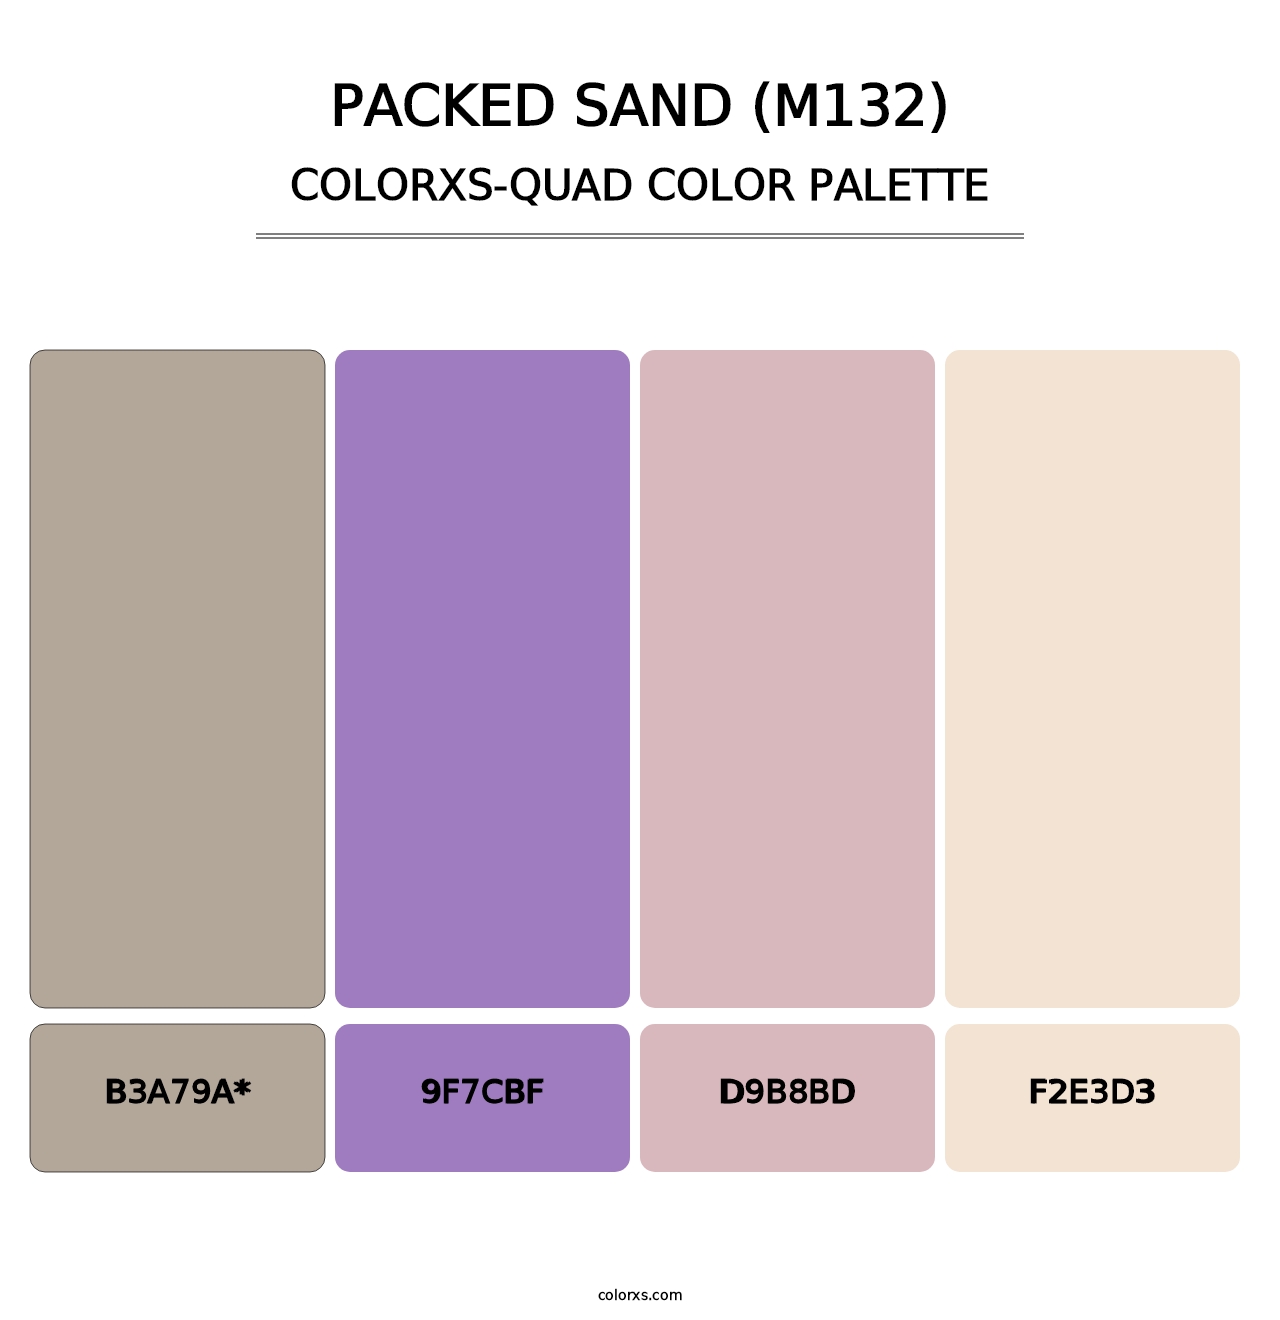 Packed Sand (M132) - Colorxs Quad Palette